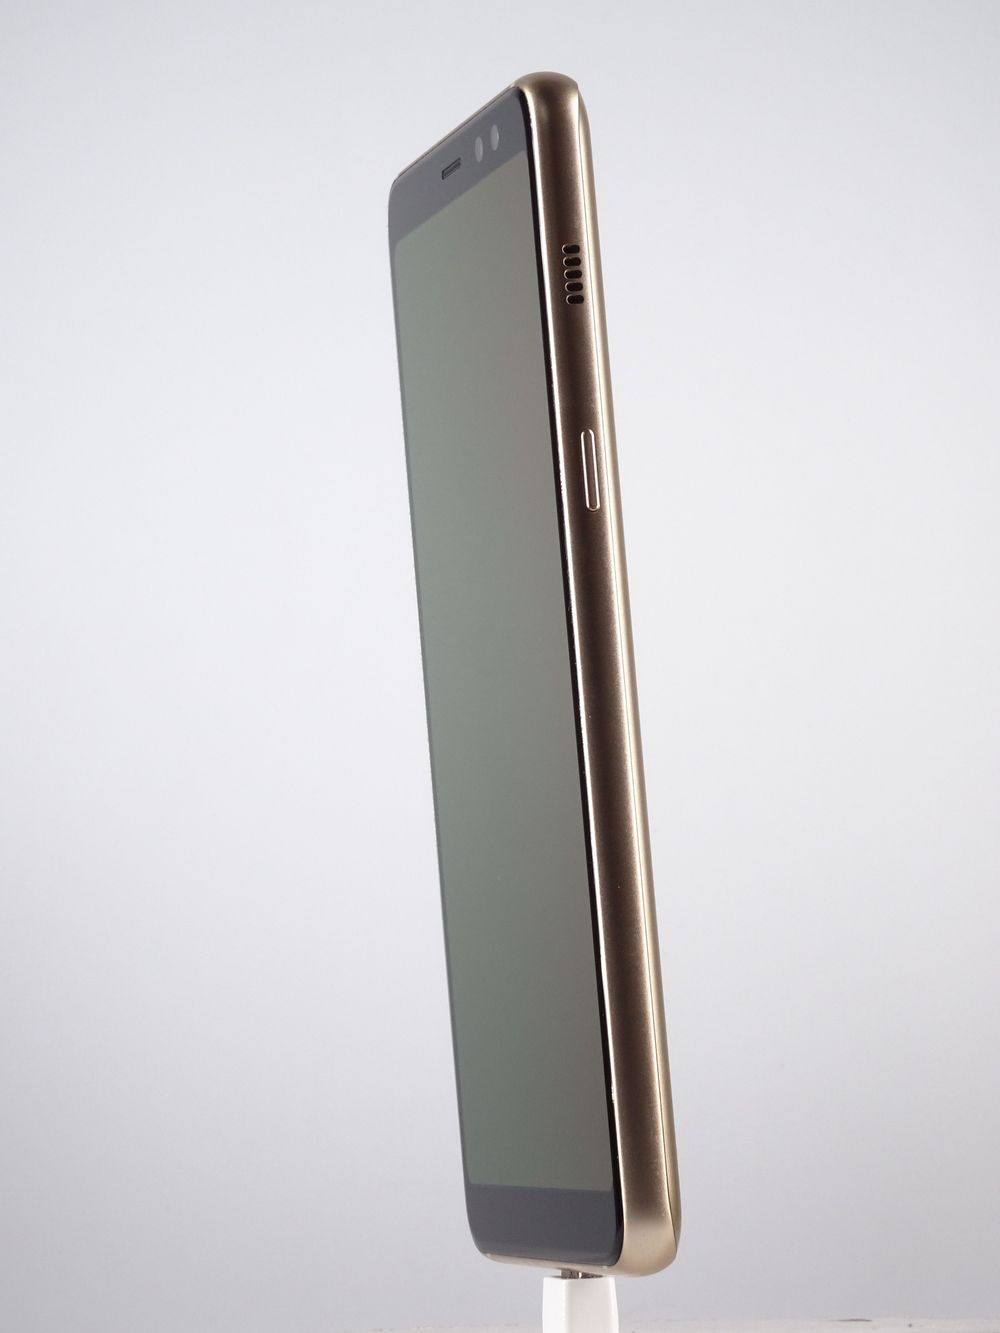 Telefon mobil Samsung Galaxy A8 (2018), Gold, 32 GB,  Ca Nou